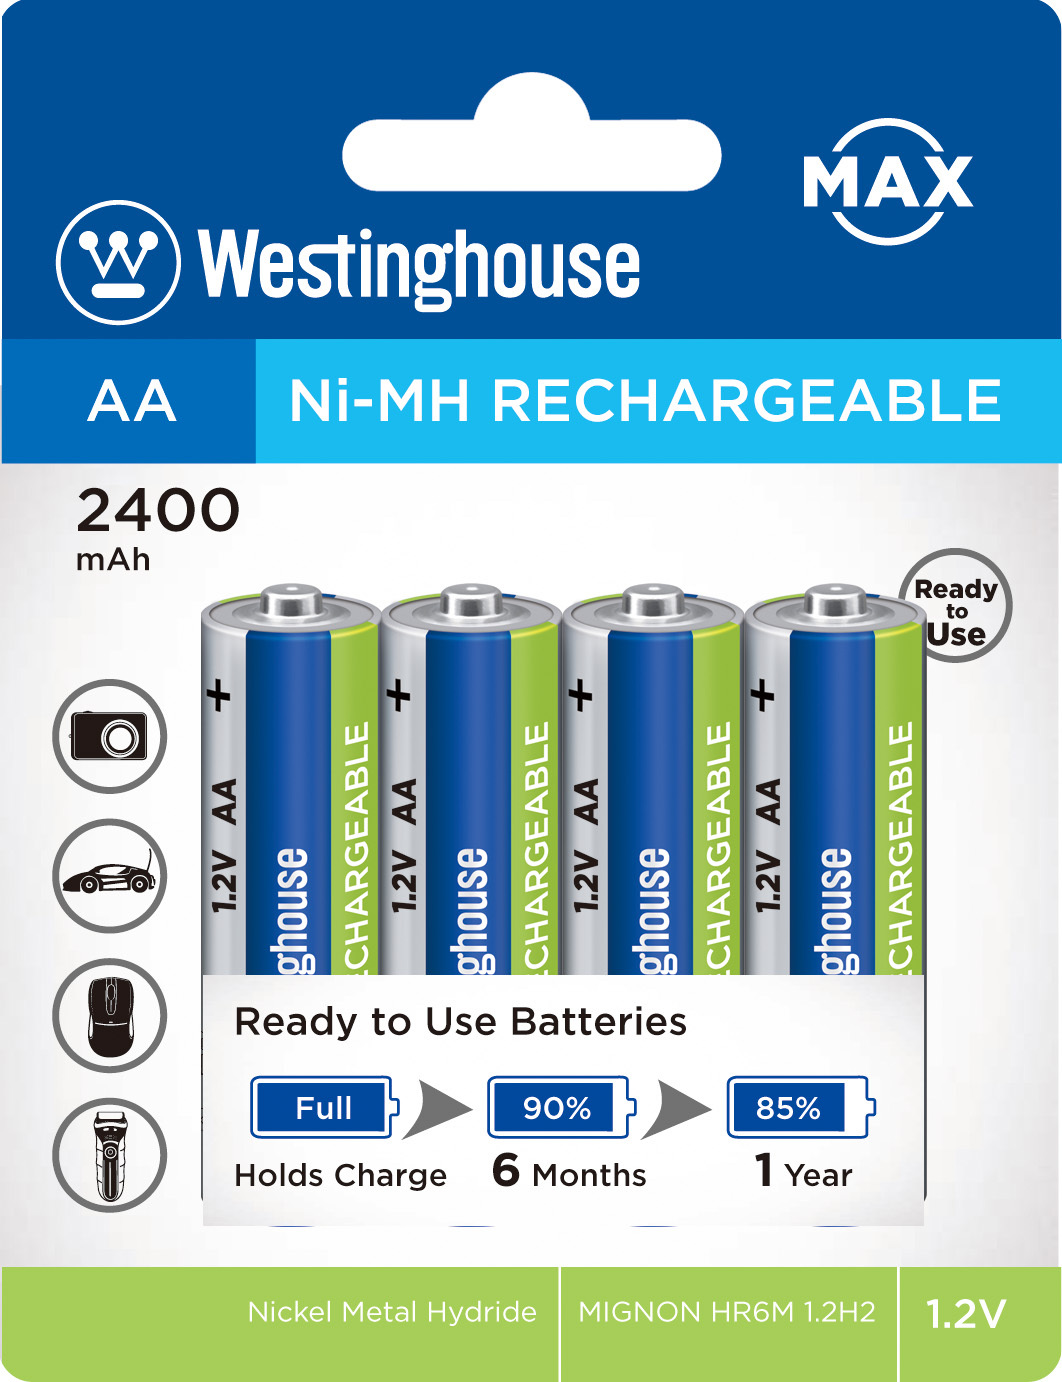 Westinghouse rechargeable batteries